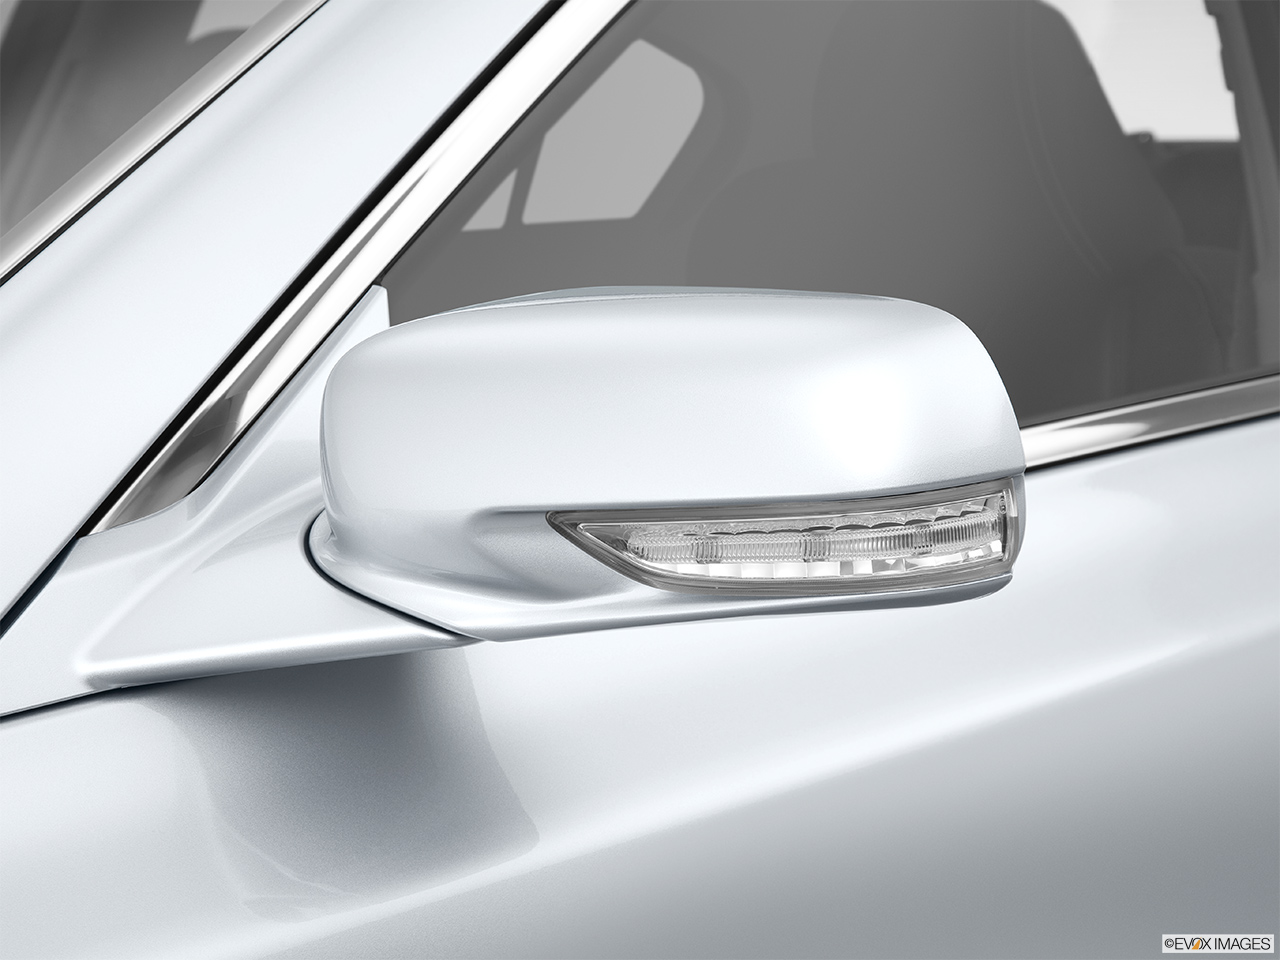 2013 Acura TL SH-AWD Driver's side mirror, 3_4 rear 